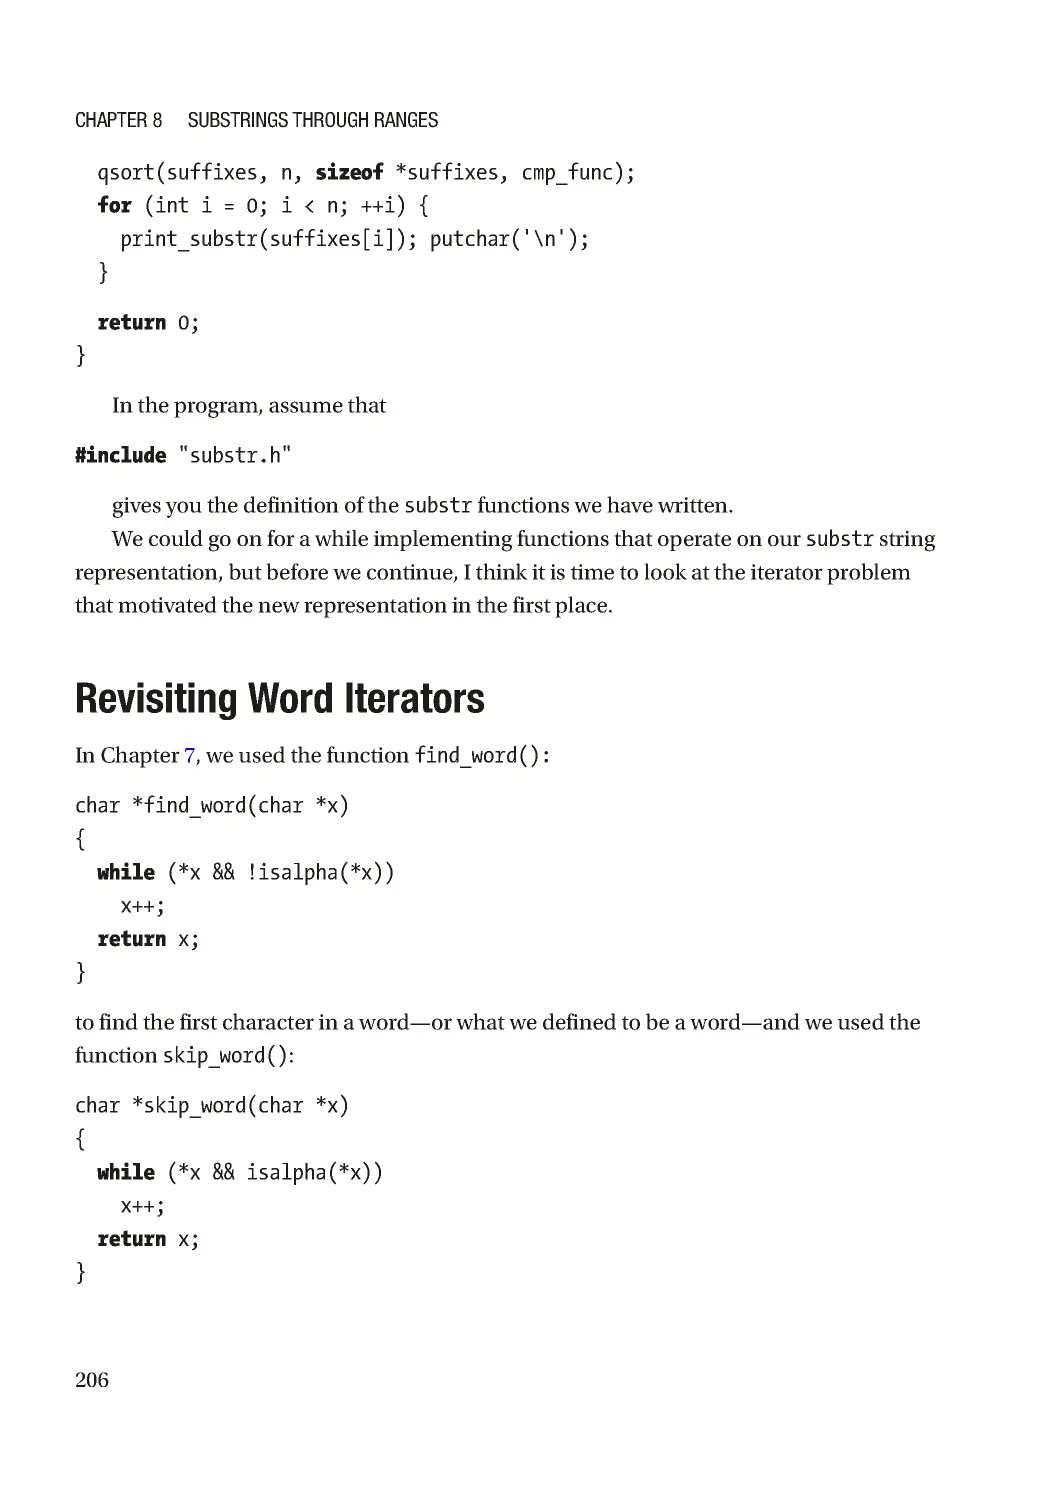 Revisiting Word Iterators